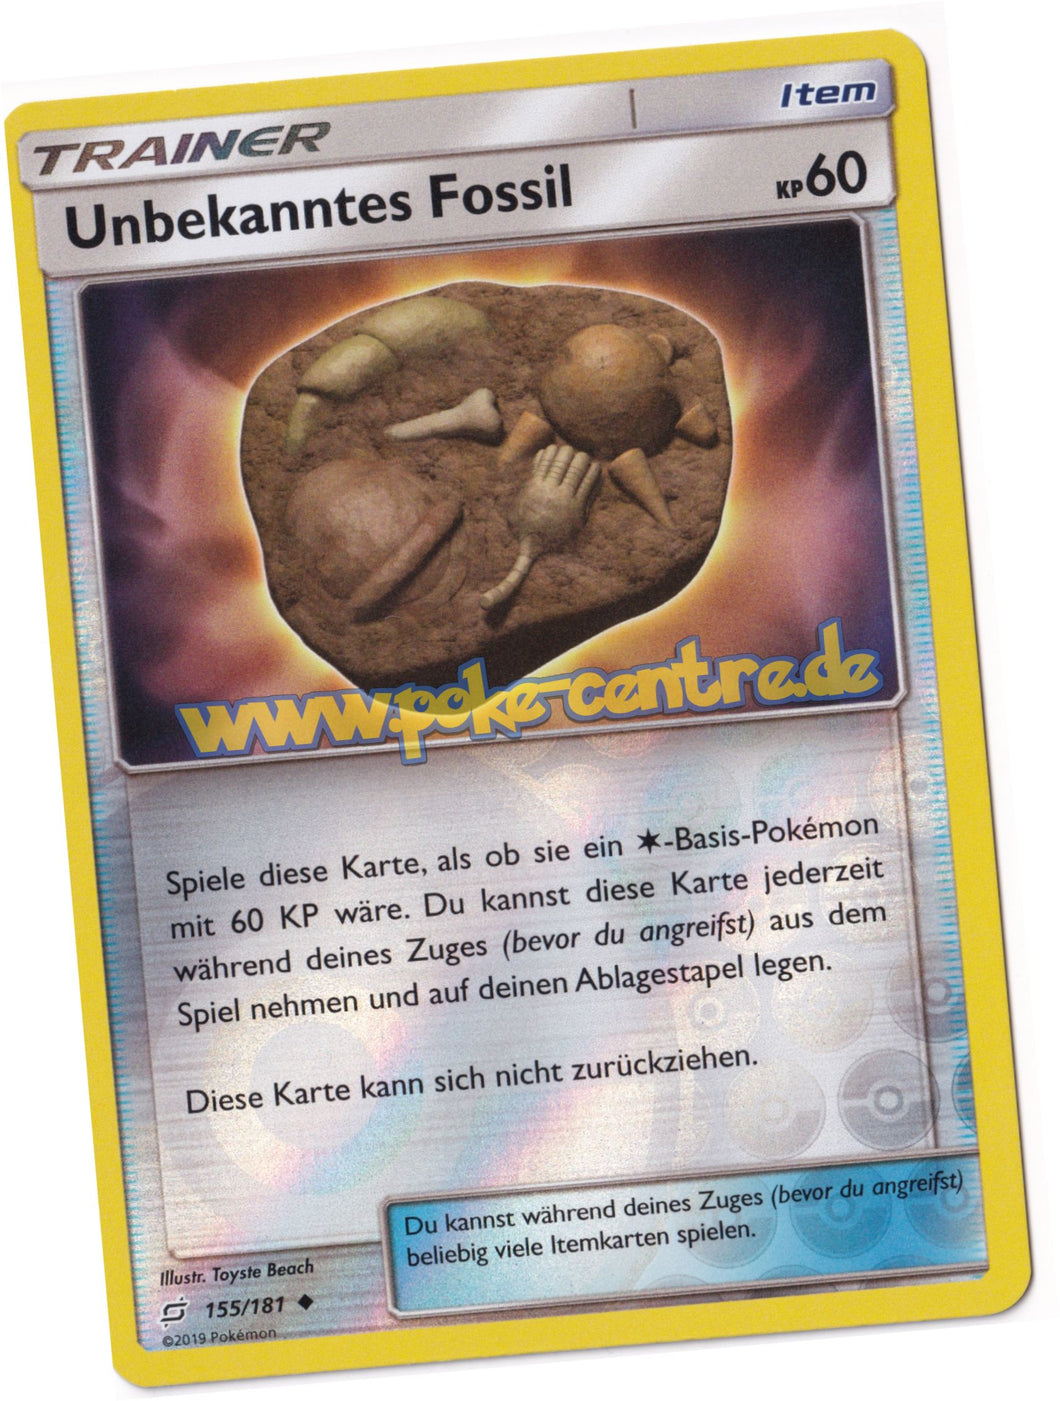 Unbekanntes Fossil 155/181 Uncommon Reverse Holo - Teams sind Trumpf Deutsch